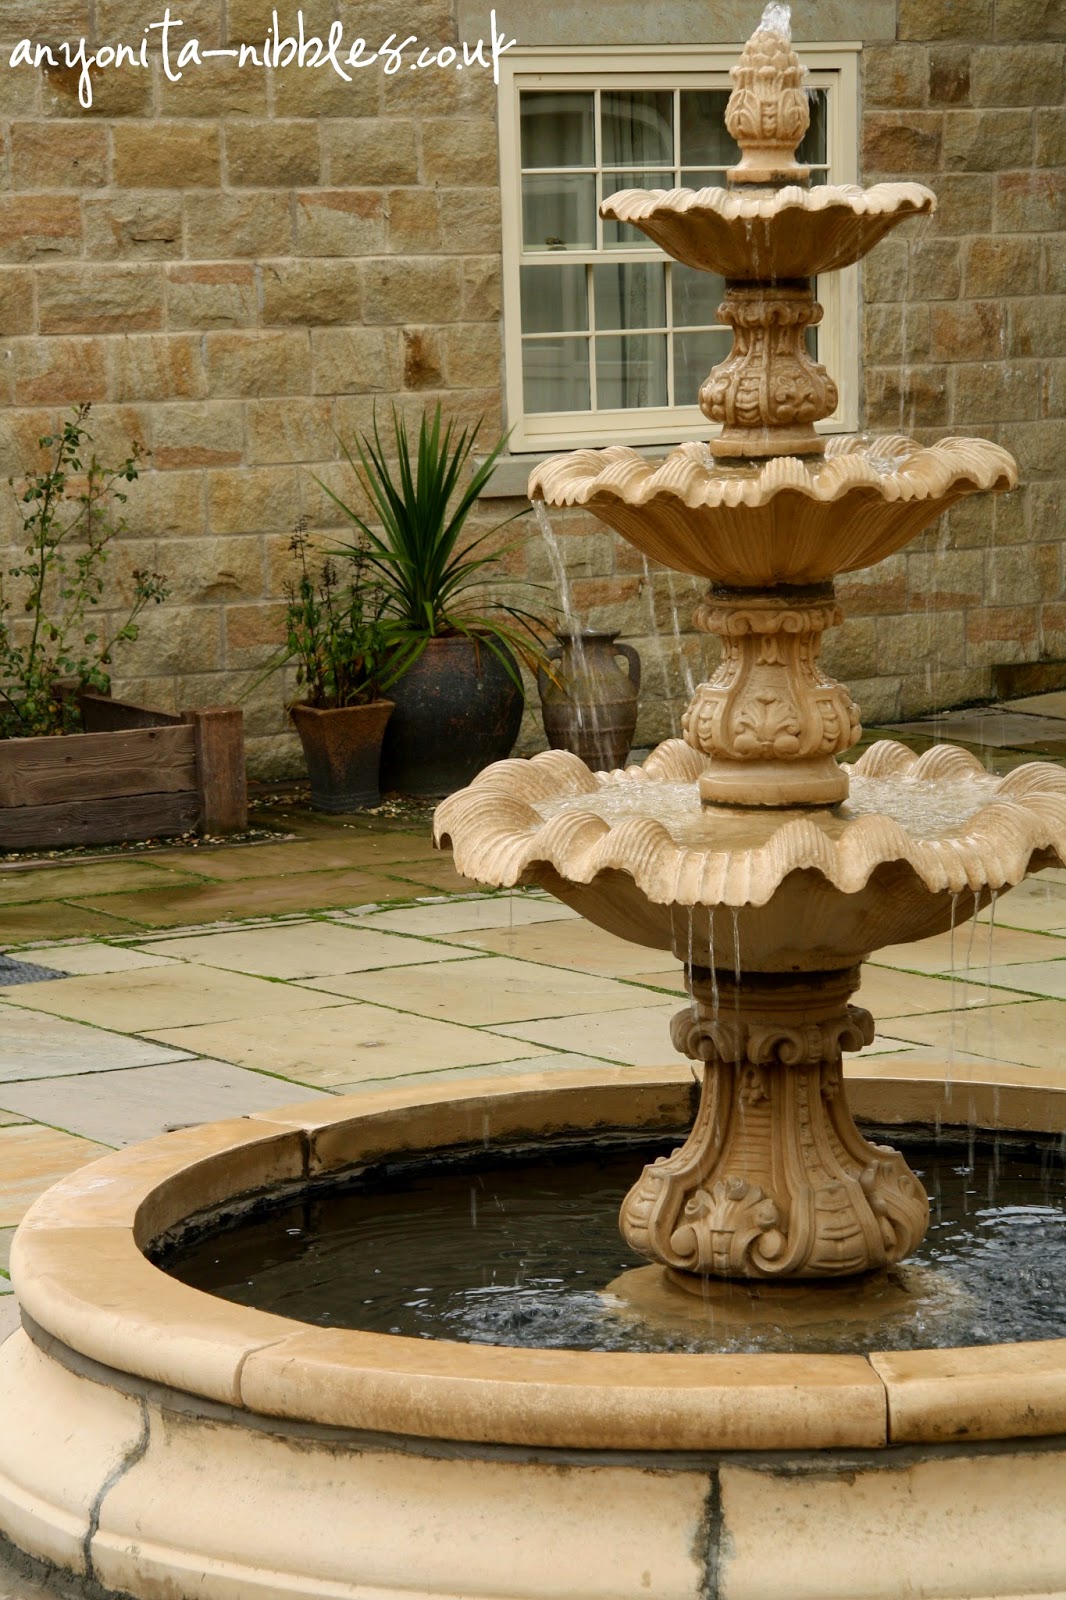 Tranquil courtyard fountain | Anyonita-nibbles.co.uk